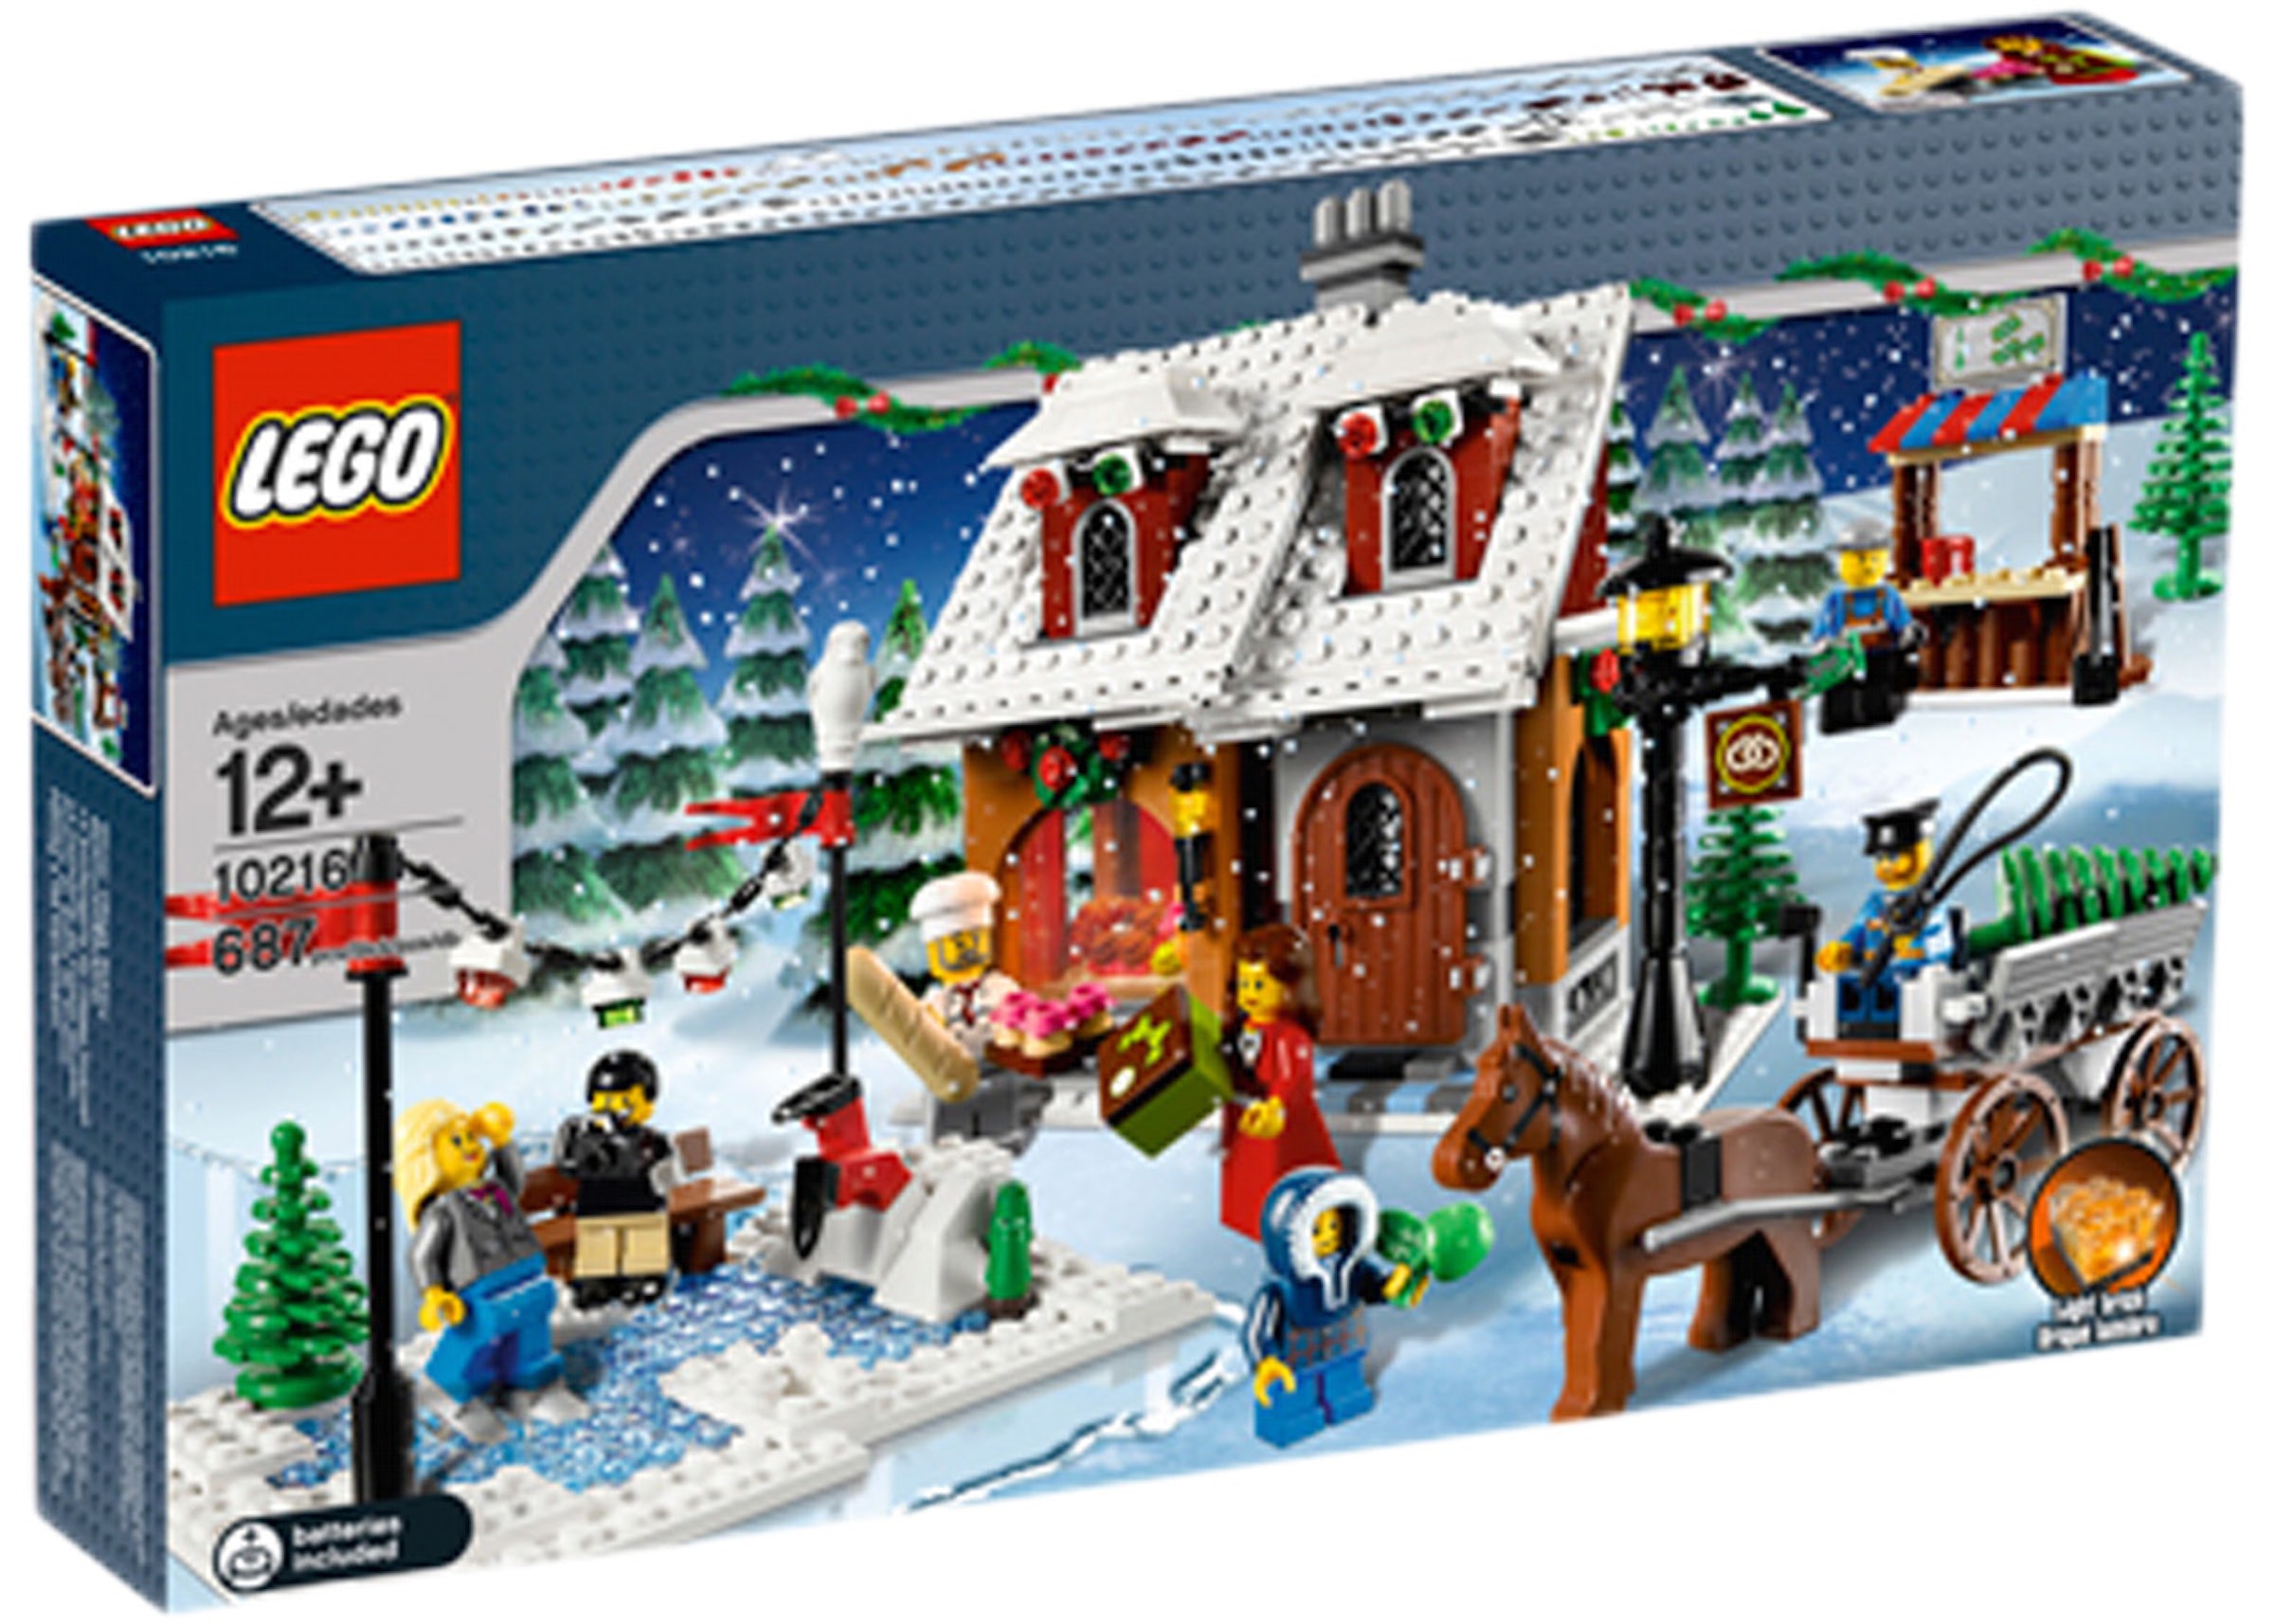 LEGO Creator Expert Winter Village Bakery Set 10216 - US